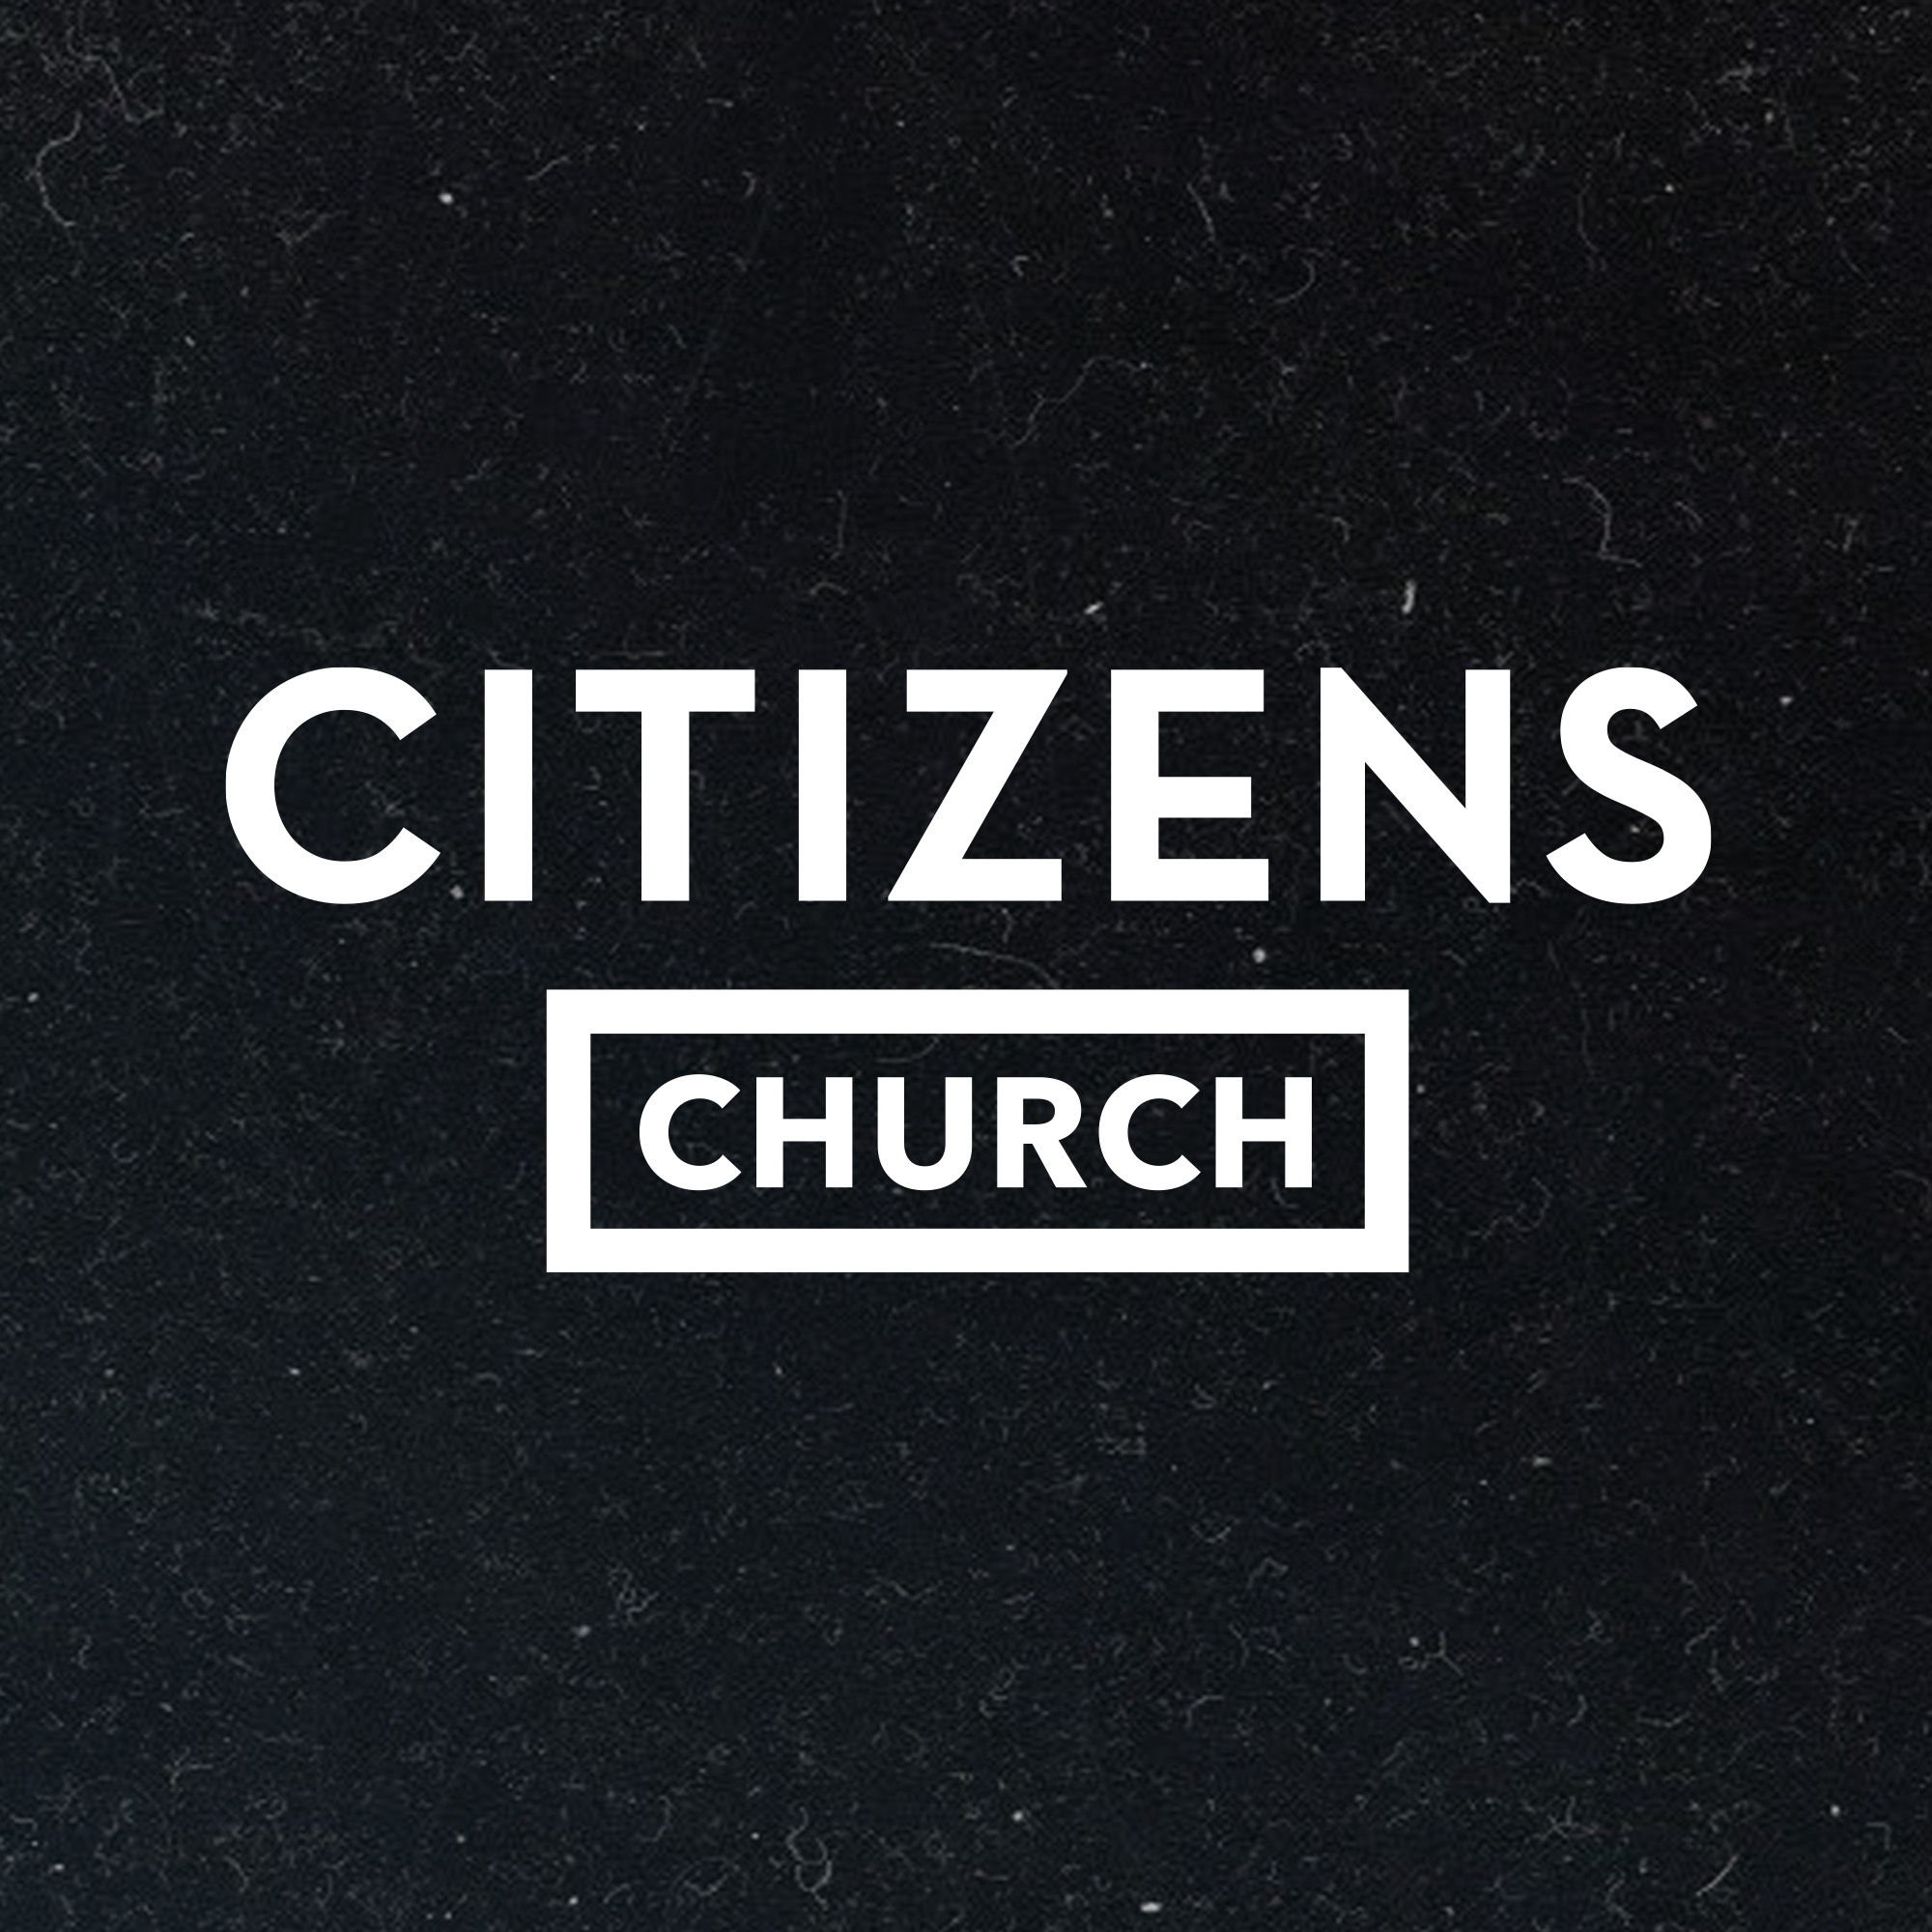 Citizens Church